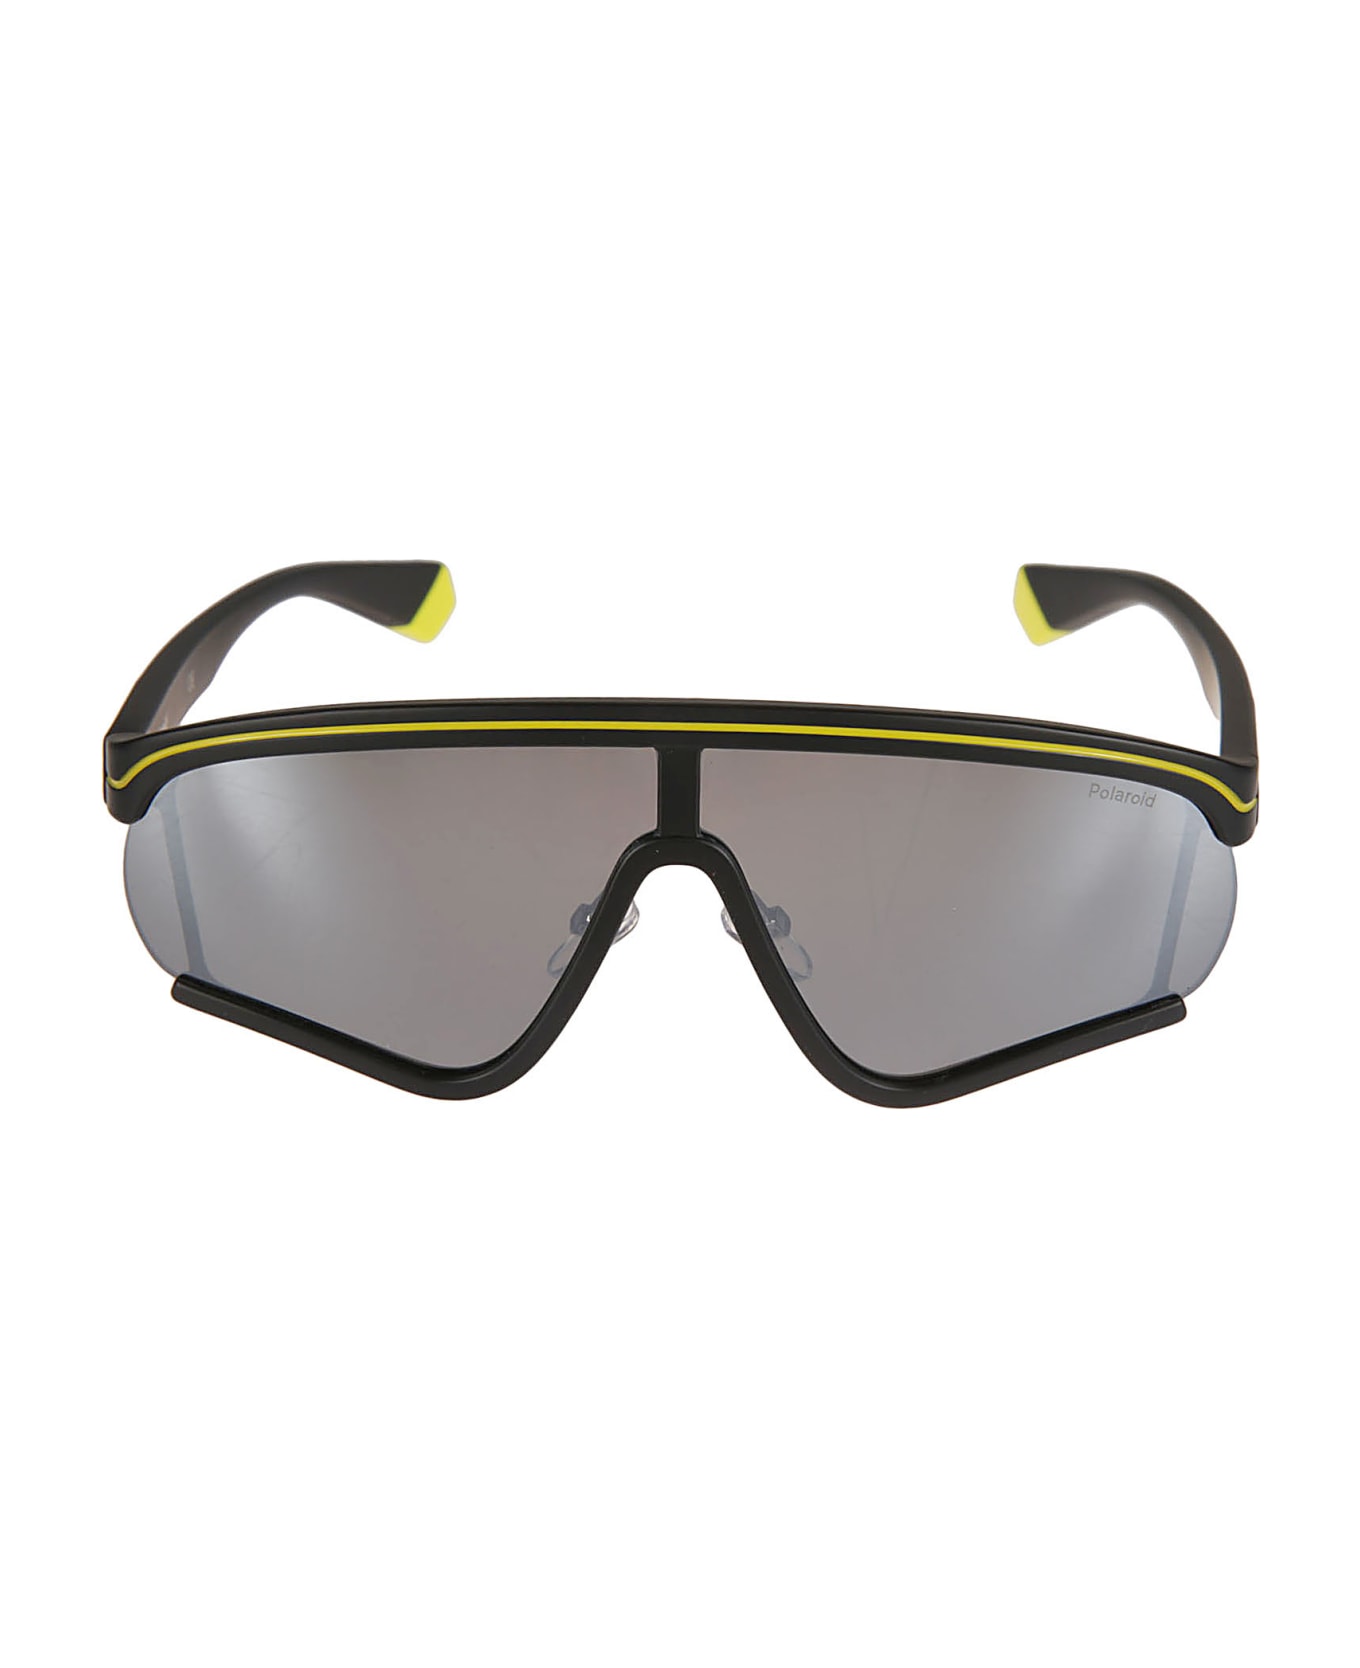 MSGM Polaroid Logo Sunglasses - Black/Yellow